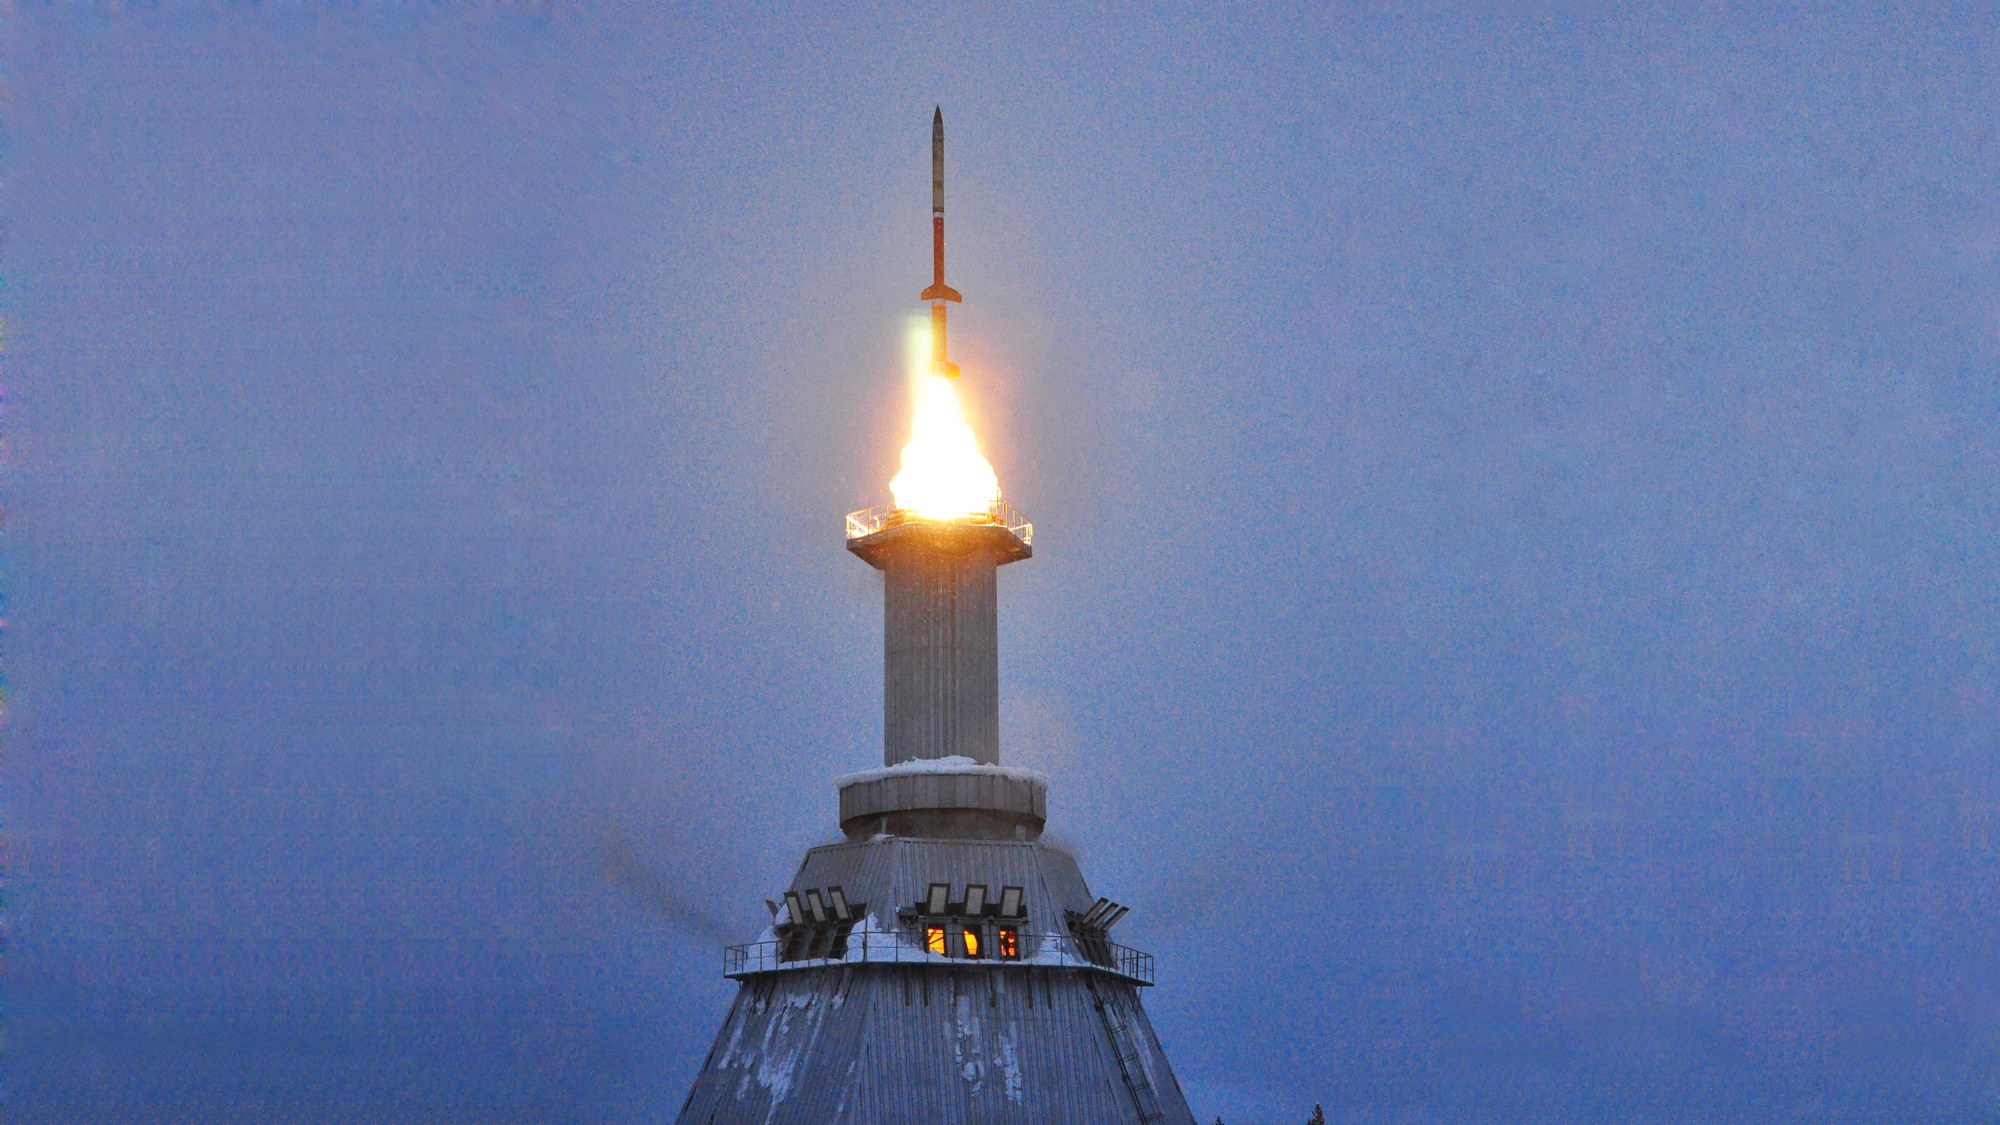 Liftoff of the Mapheus sounding rocket